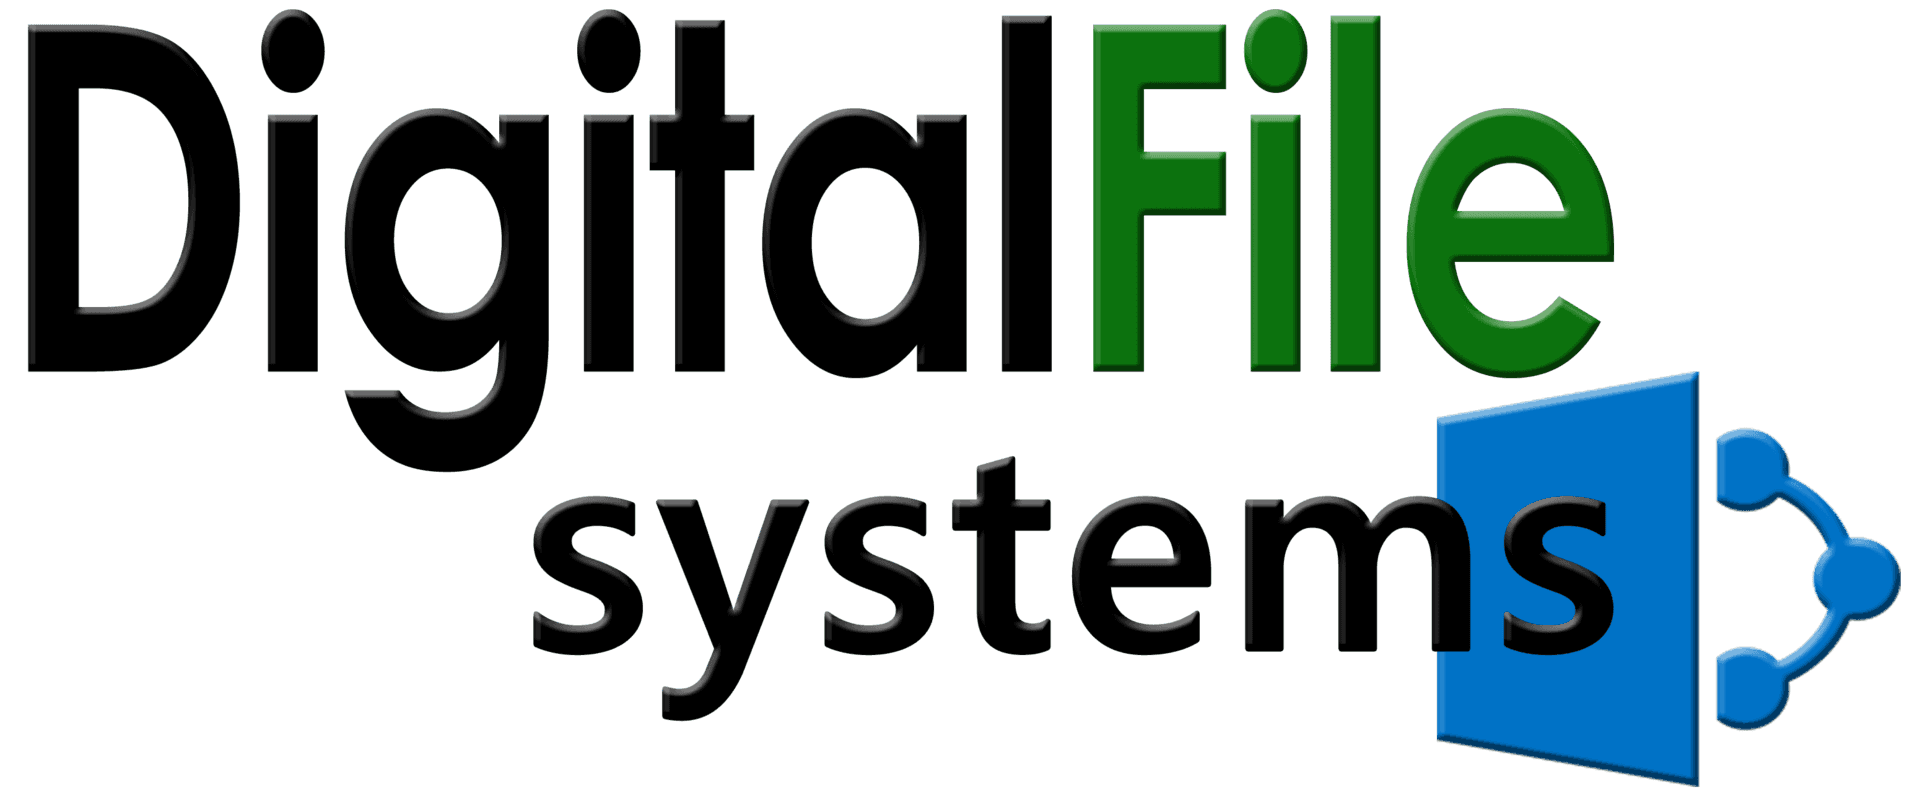 Digital File Systems  Microsoft Certified Partner Company